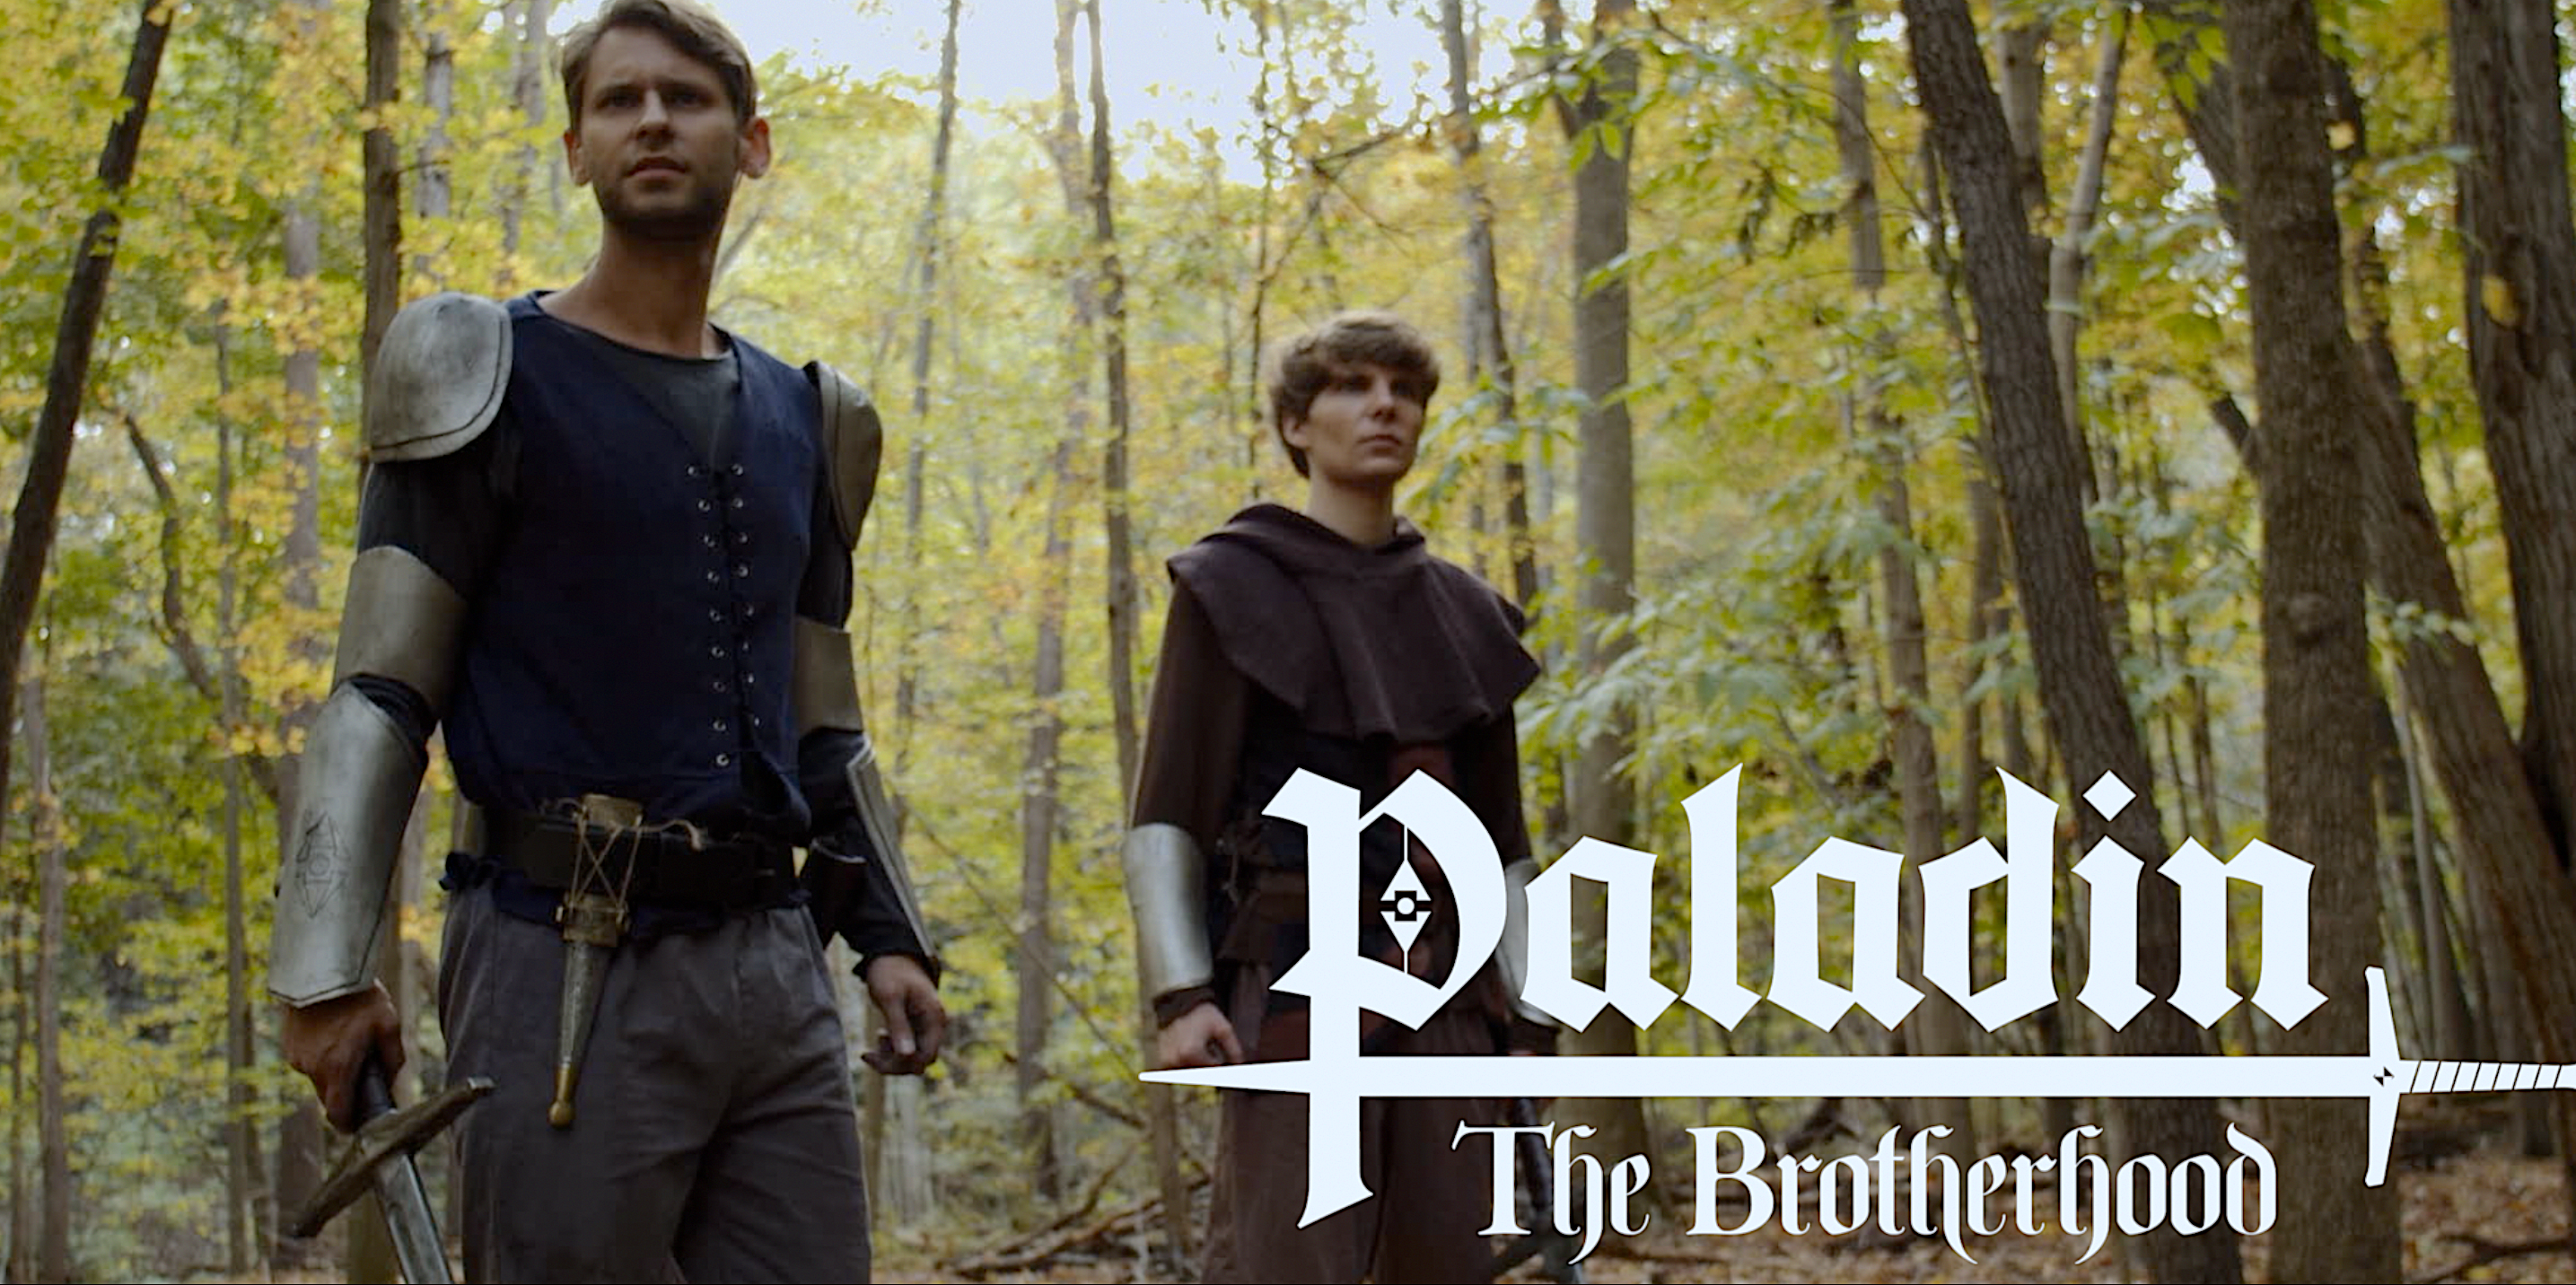 Paladin: The Brotherhood Episode 1 Poster Image